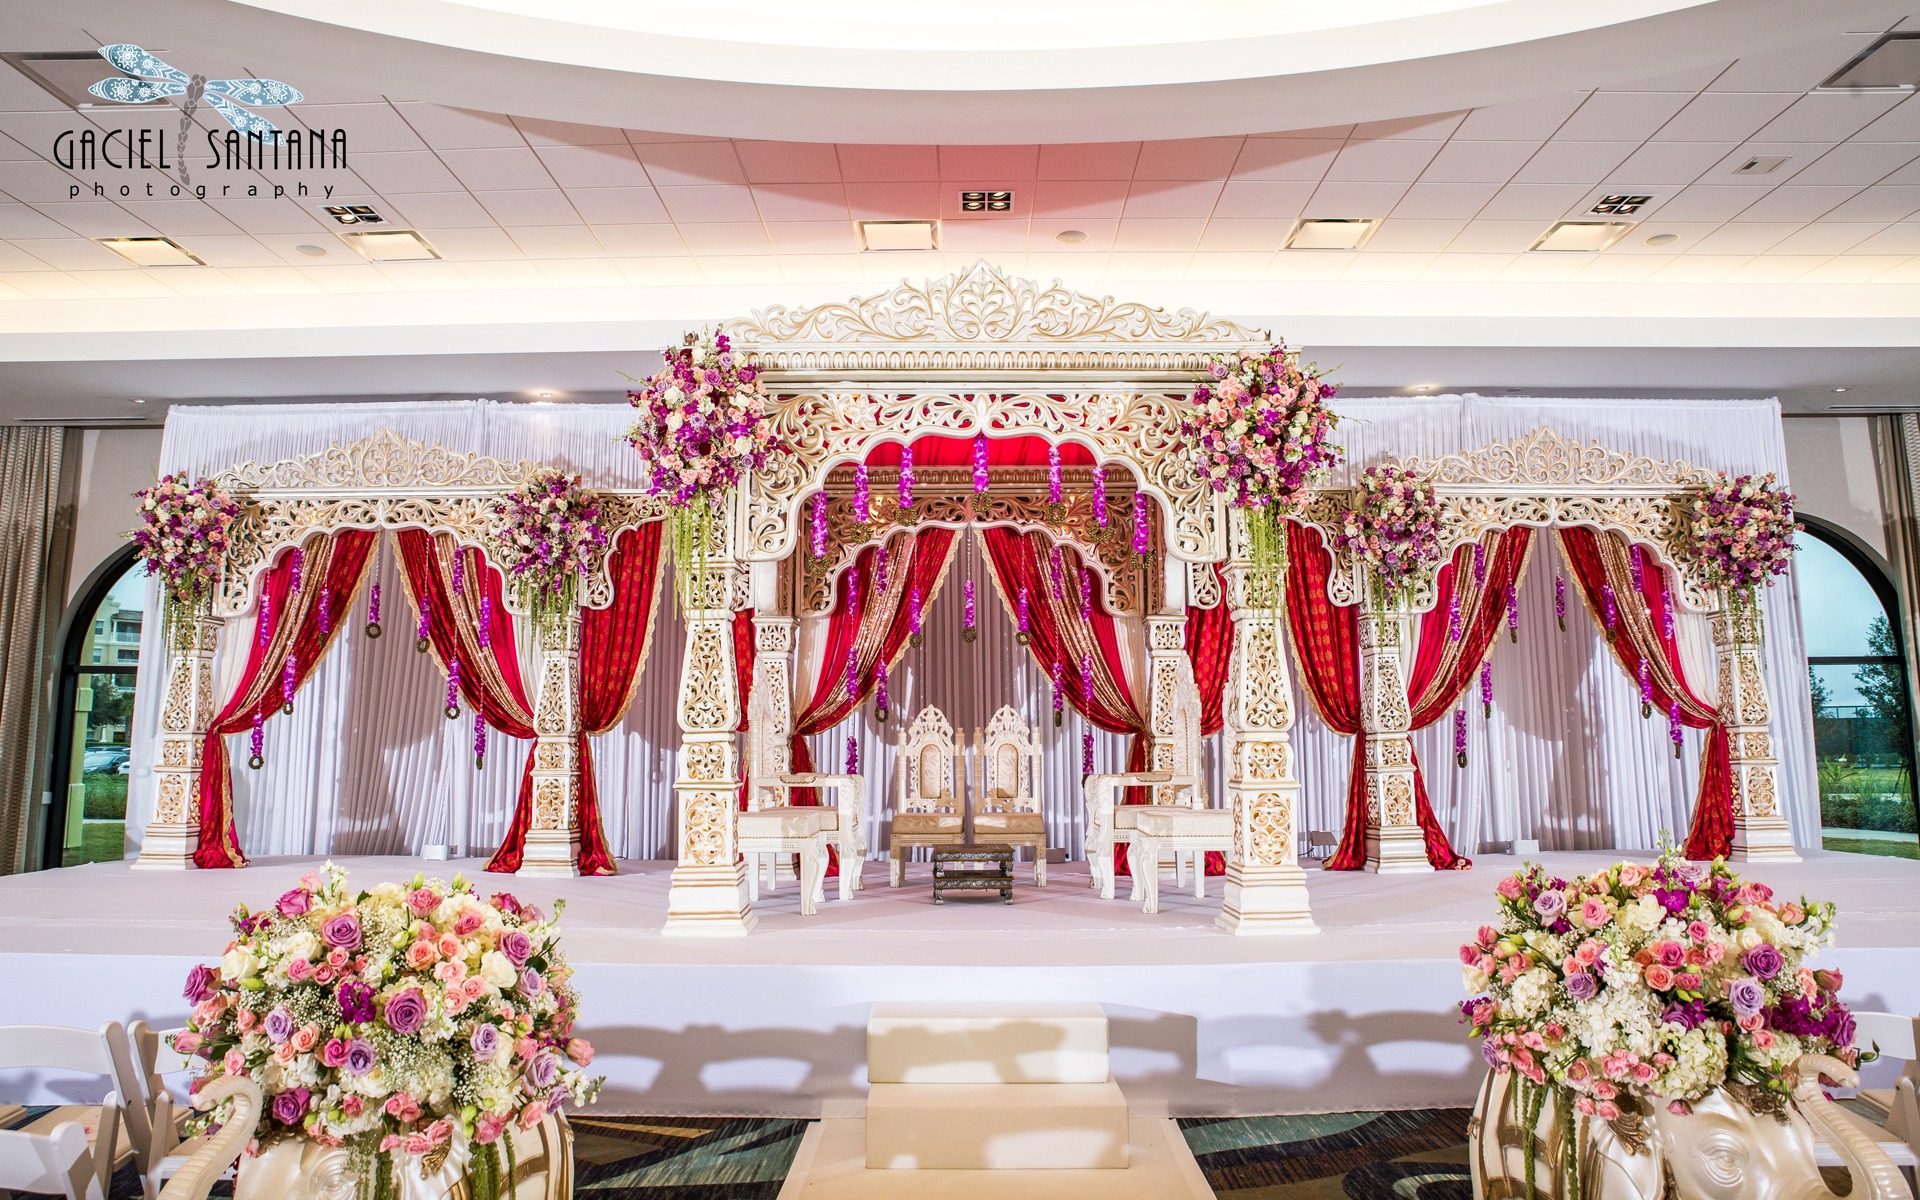 Aurora Ceremony Royal Fairytale 1 South Asian Indian Wedding Decor Design Suhaag Garden Florida